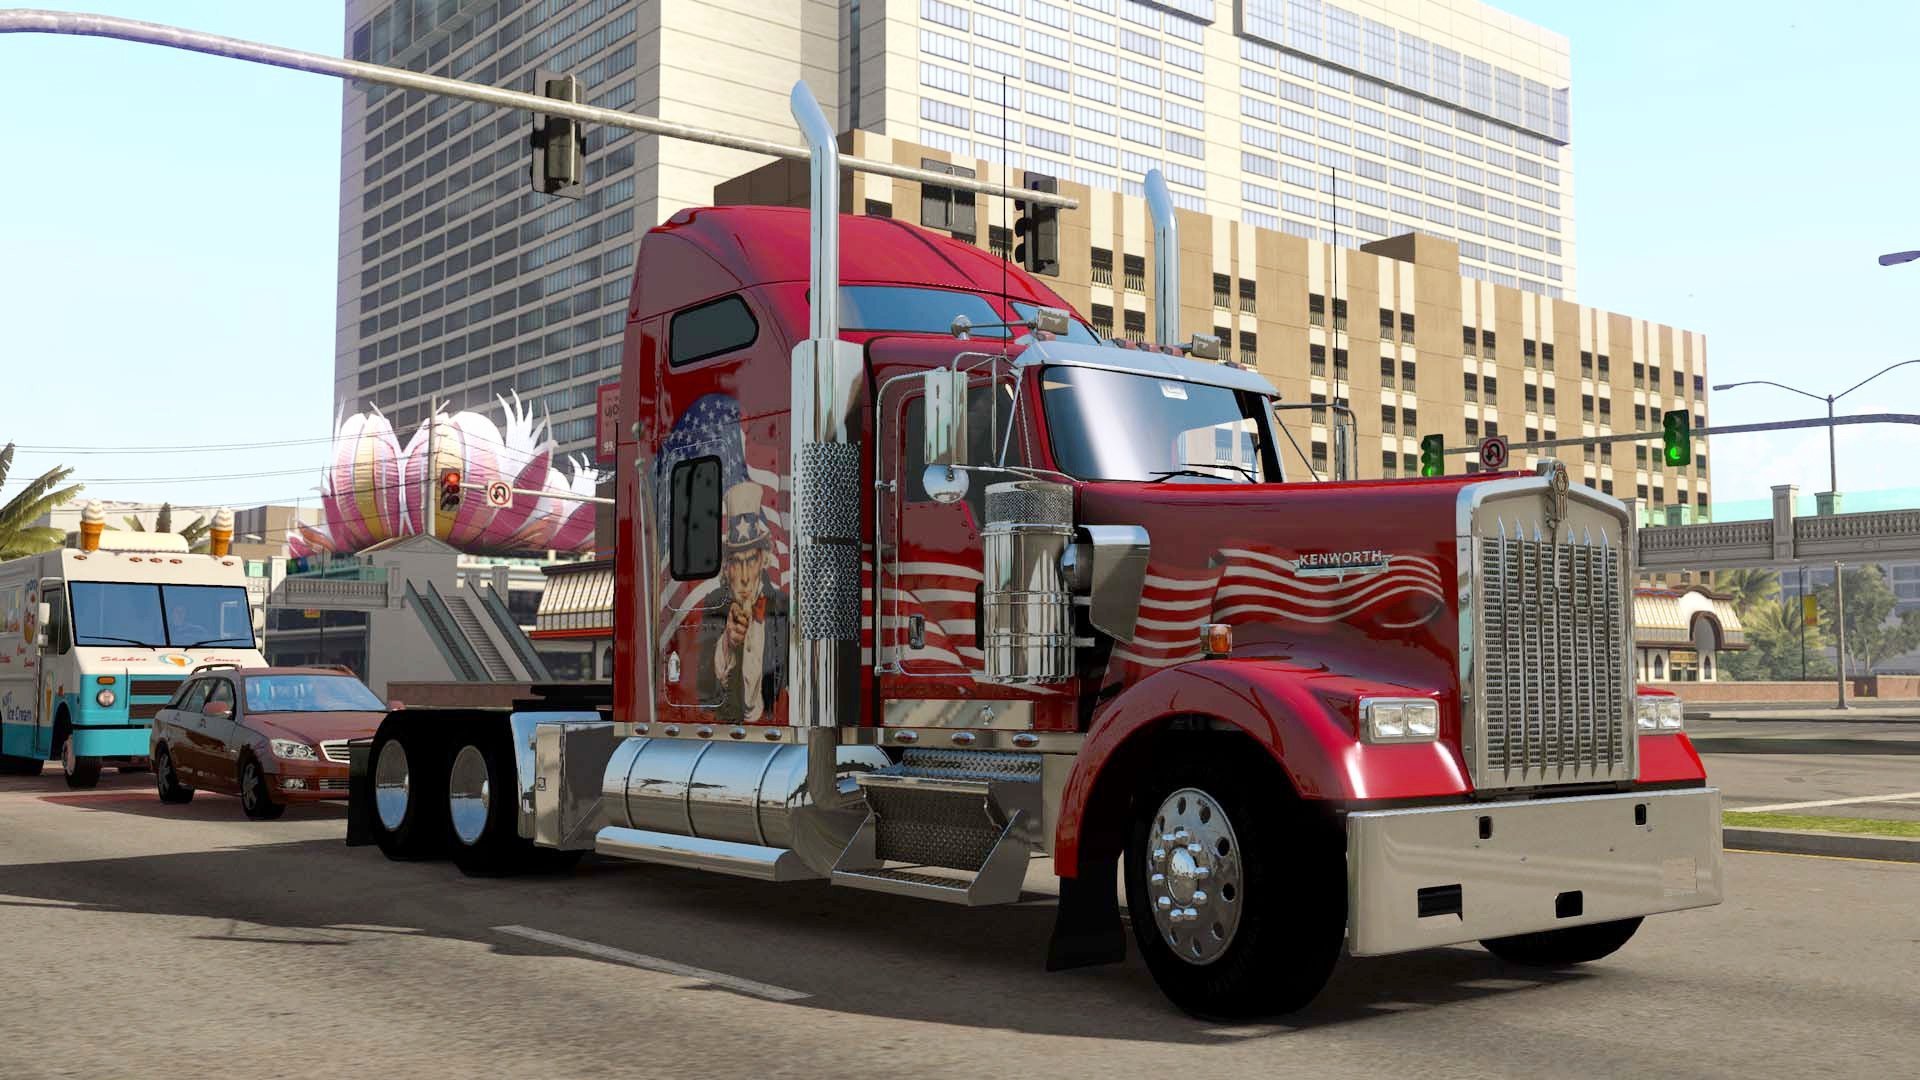 american truck simulator, video game